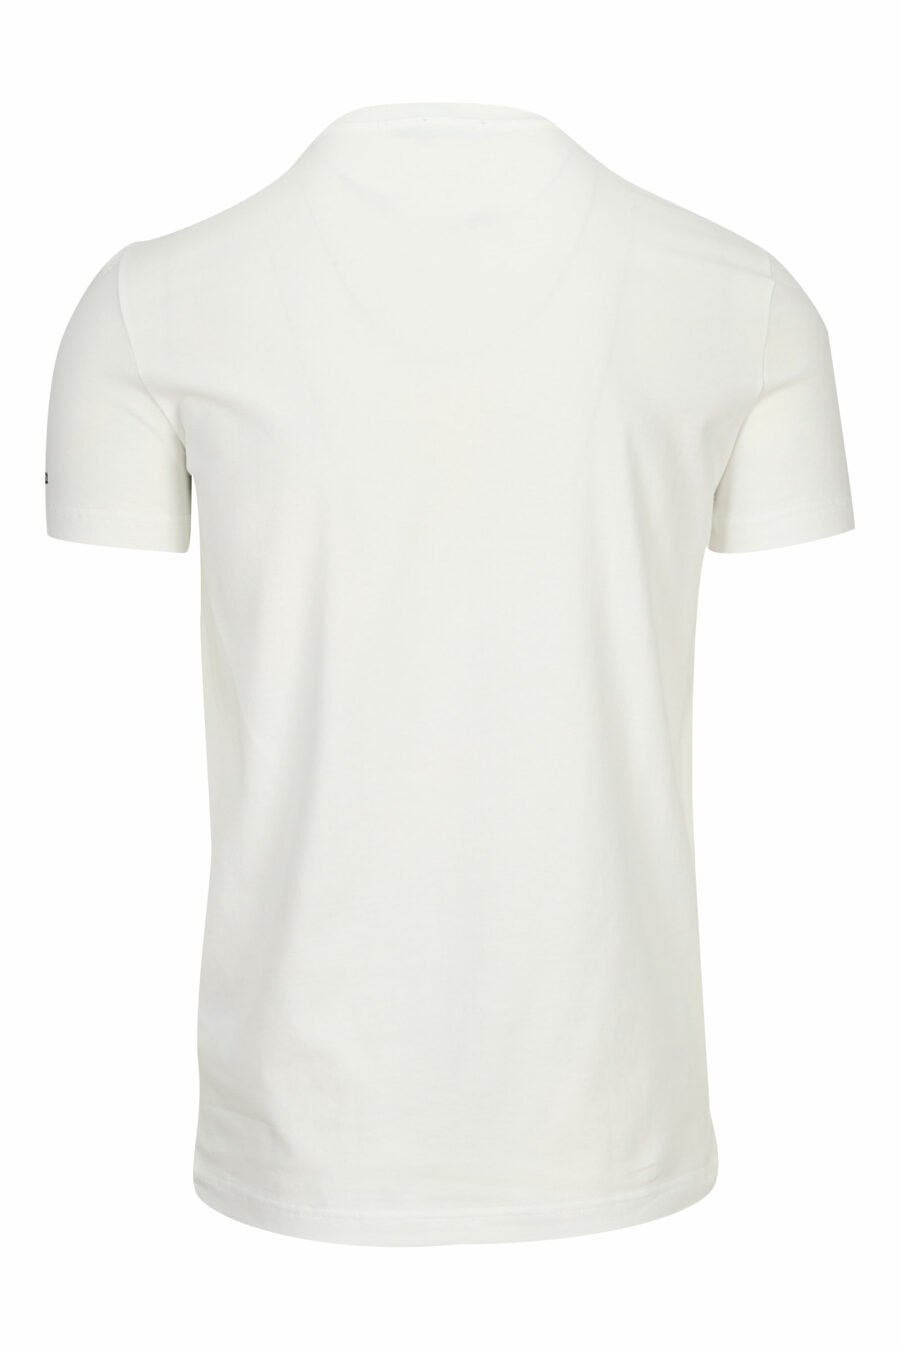 White T-shirt with minilogue "underwear" - 8032674811561 1